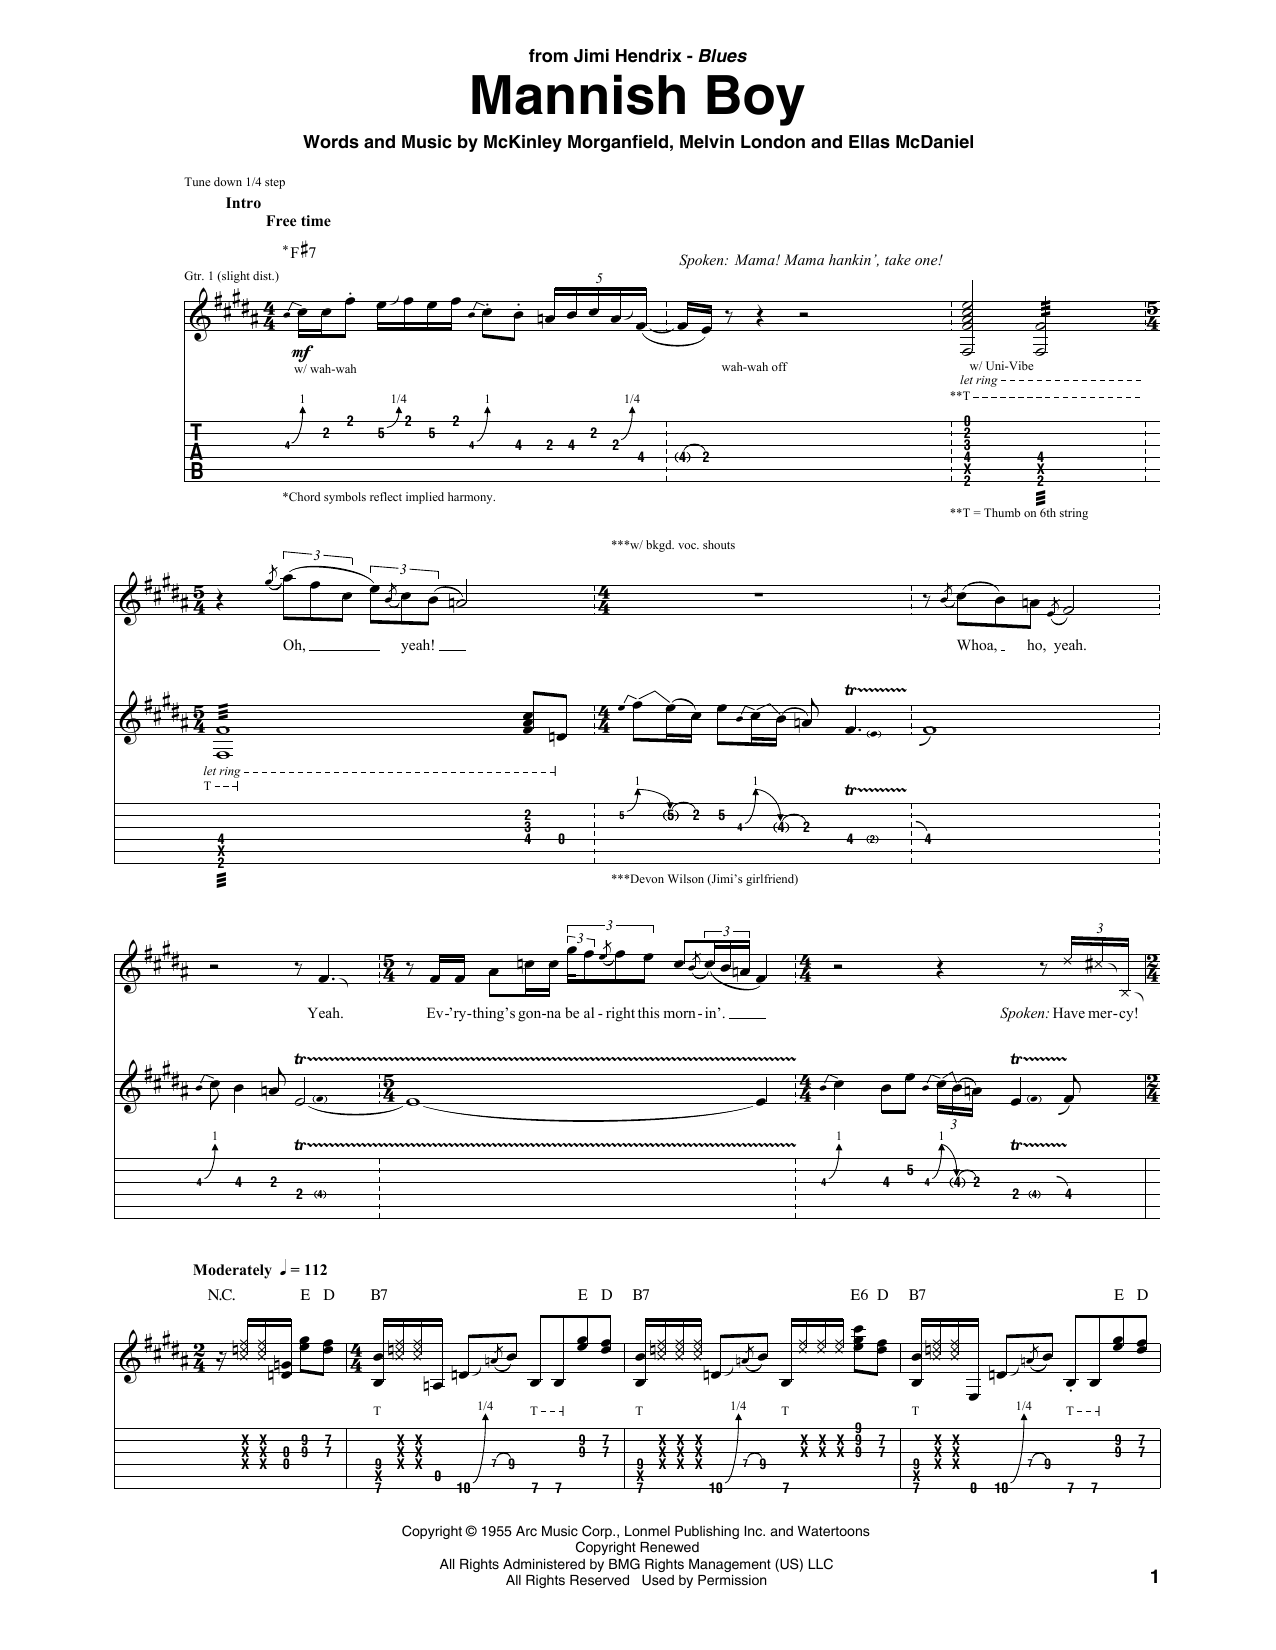 Jimi Hendrix Mannish Boy Sheet Music Notes & Chords for Lyrics & Chords - Download or Print PDF